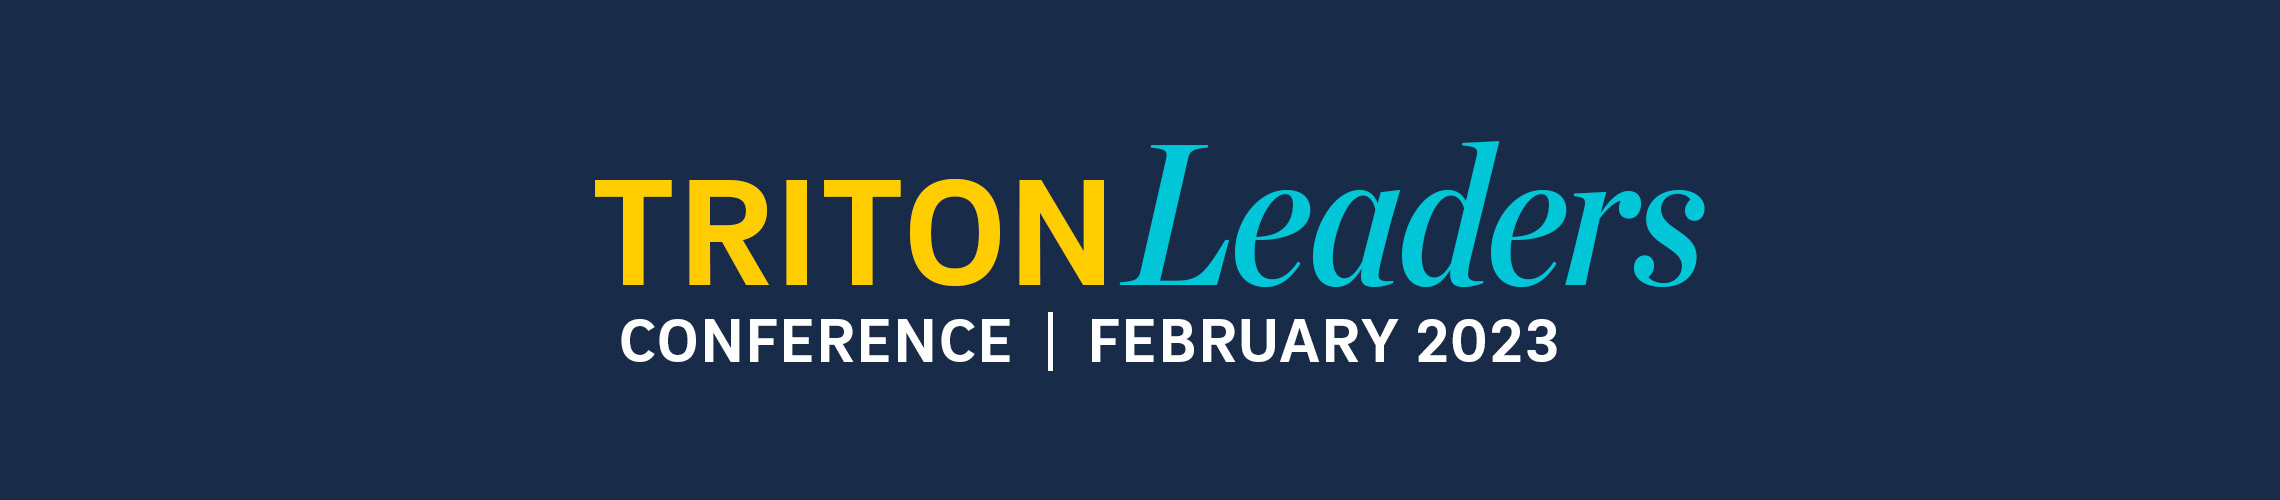 Triton Leaders Conference: February 2023